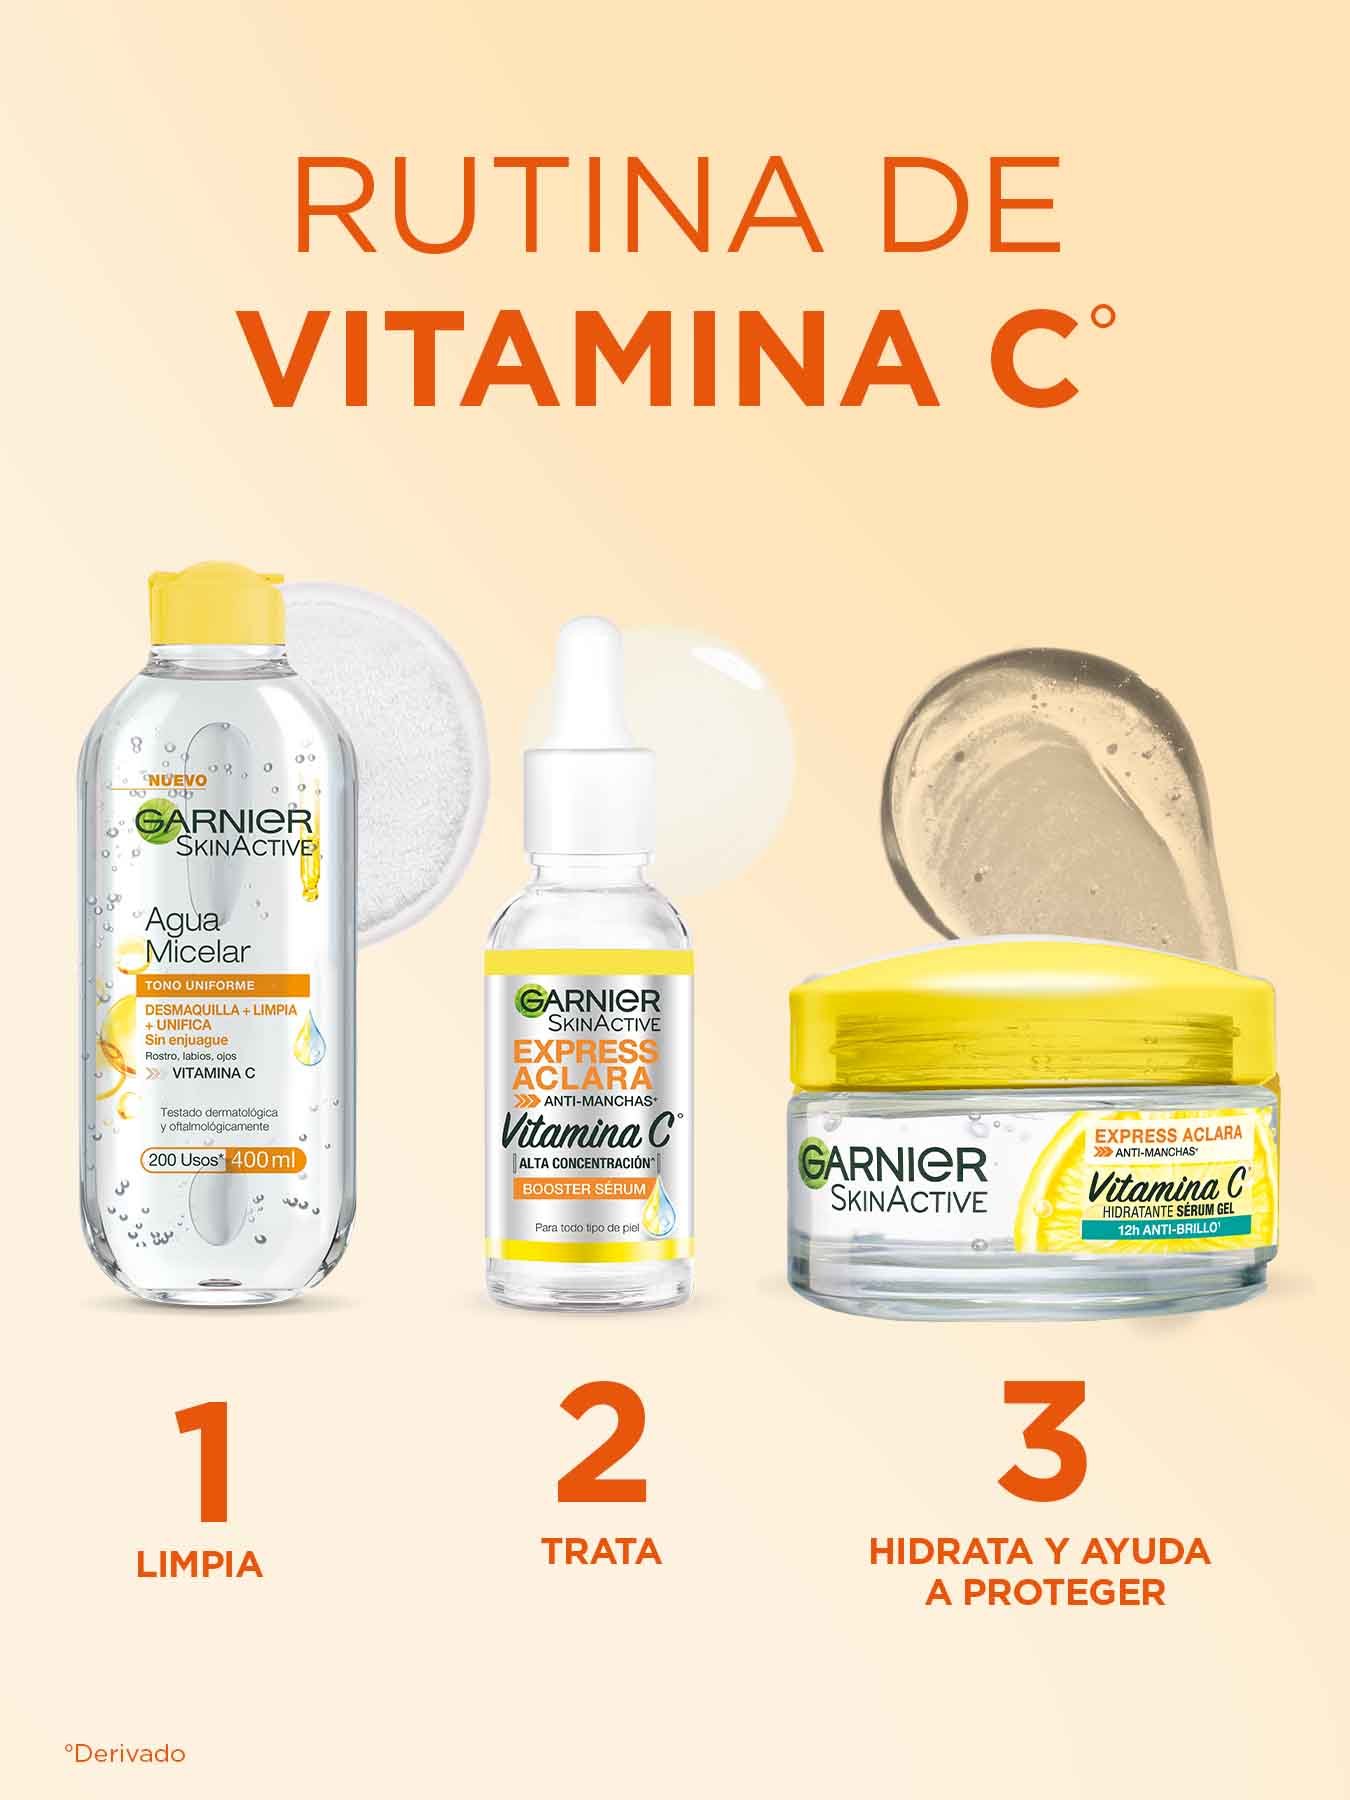 Rutina de vitamina C  1.- Limpia: Agua micelar 2.- Trata Sérum 3.- Hidrata y ayuda a proteger: Gel hidratante